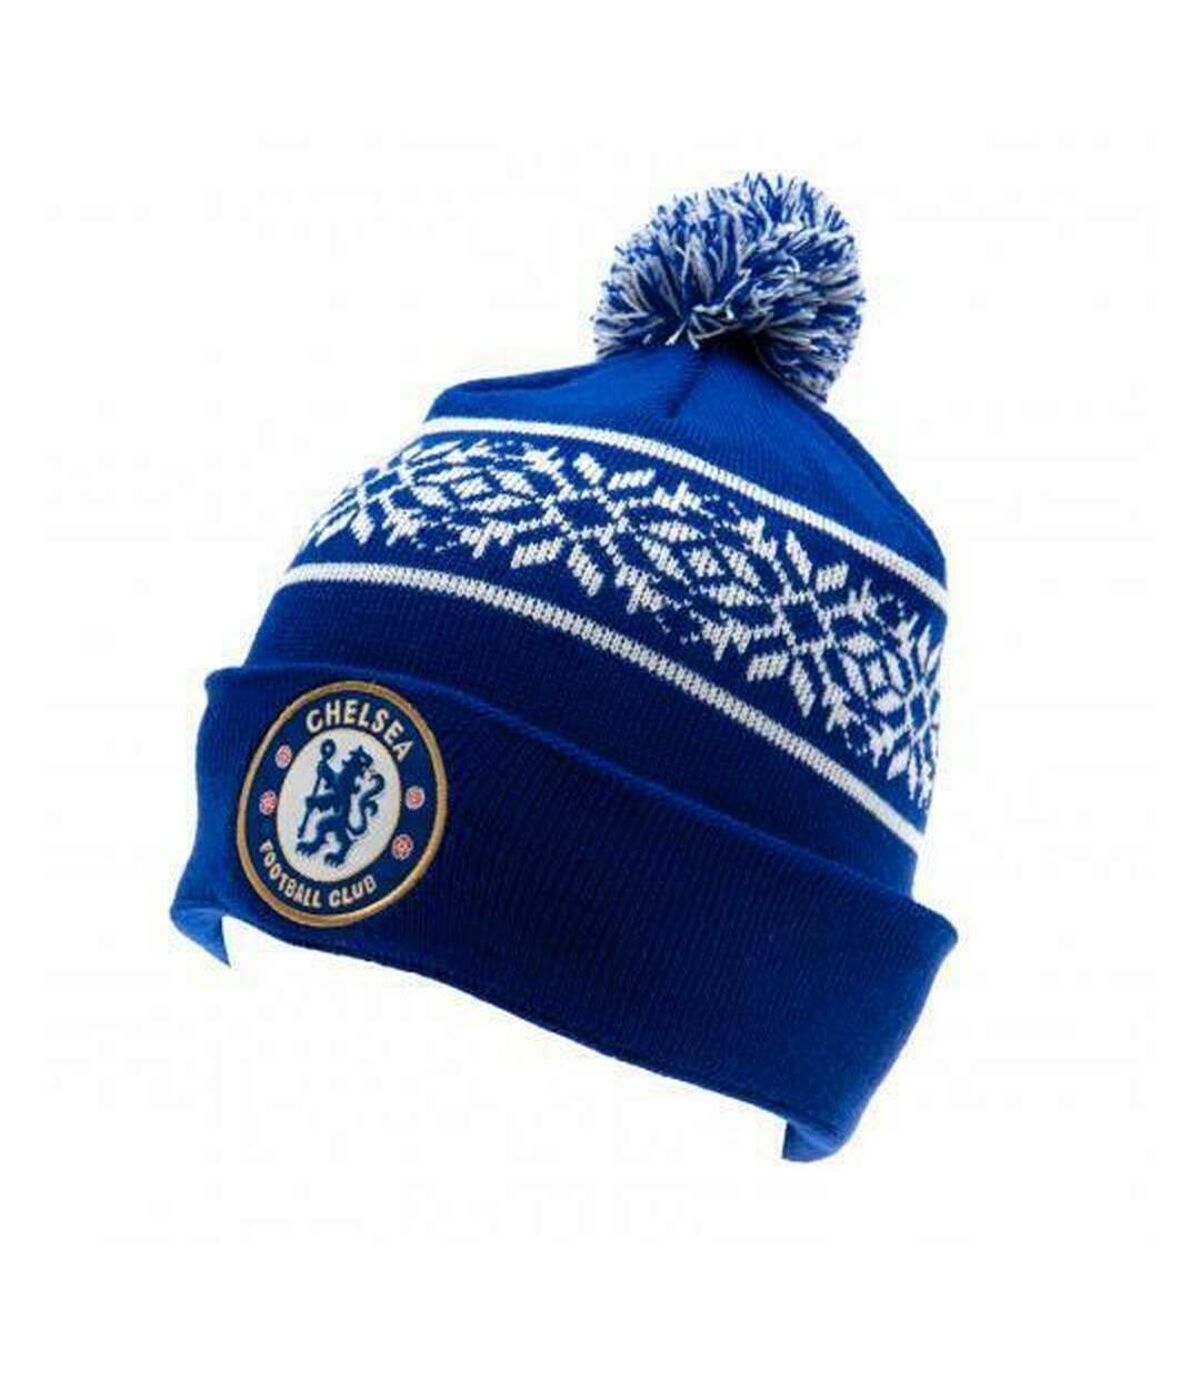 Chelsea Fc - Bonnet Officiel (Bleu) - UTSG18078